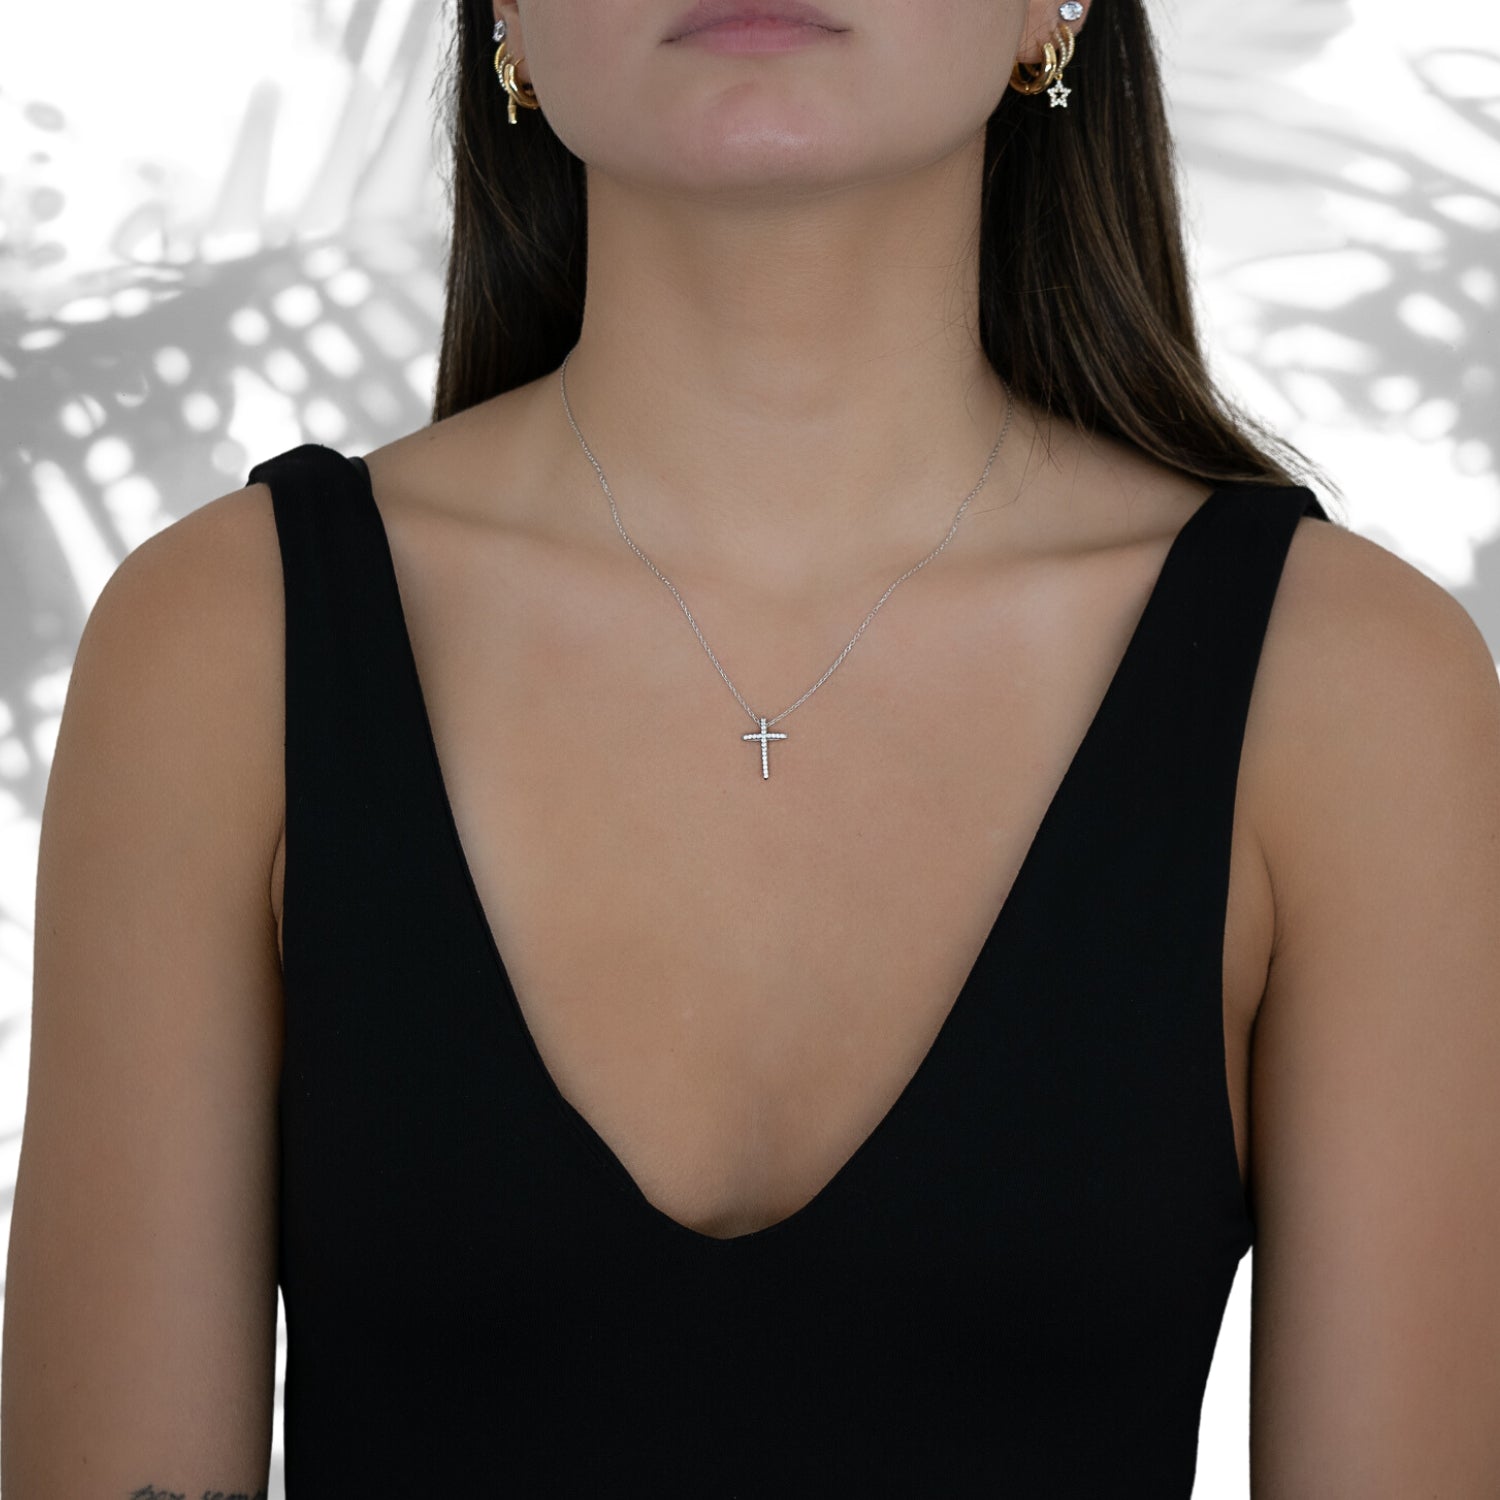 The Unique Cross Diamond Necklace beautifully adorning the model&#39;s neckline.